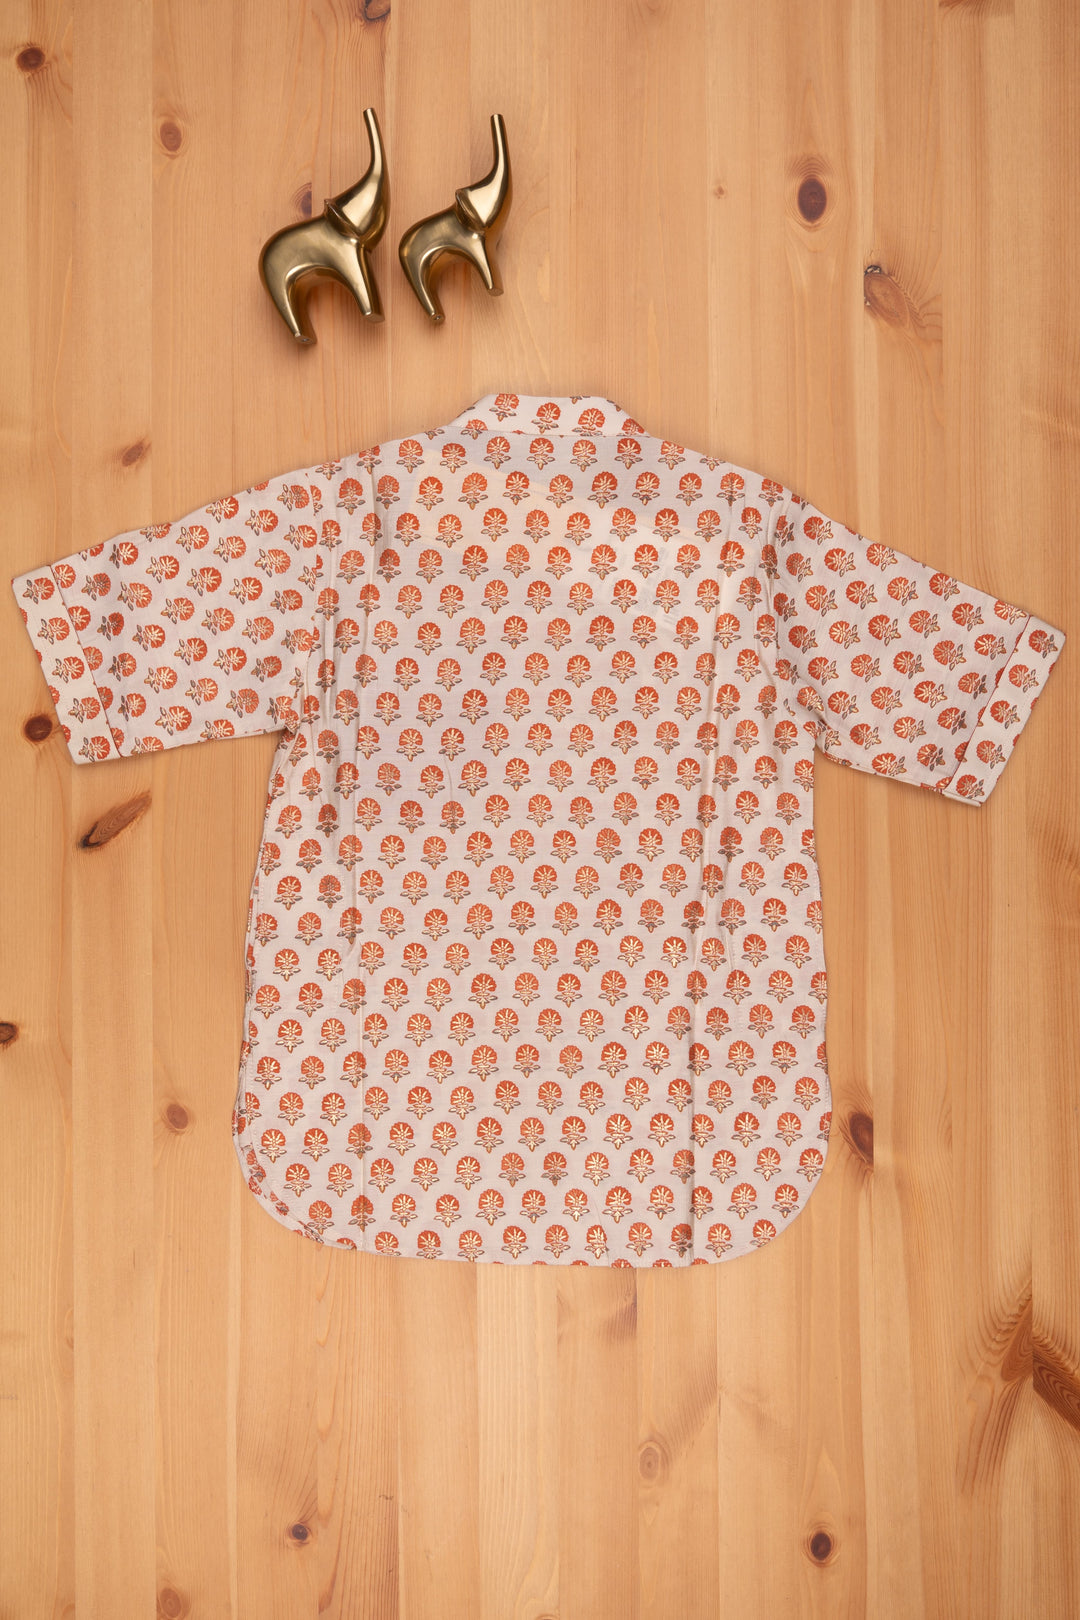 The Nesavu Boys Linen Shirt Natural Blossom: Boys Beige Cotton Shirt with Floral Prints, Mandarin Collar Nesavu Boys Cotton Shirt | Latest Design Side Button Closure | The Nesavu